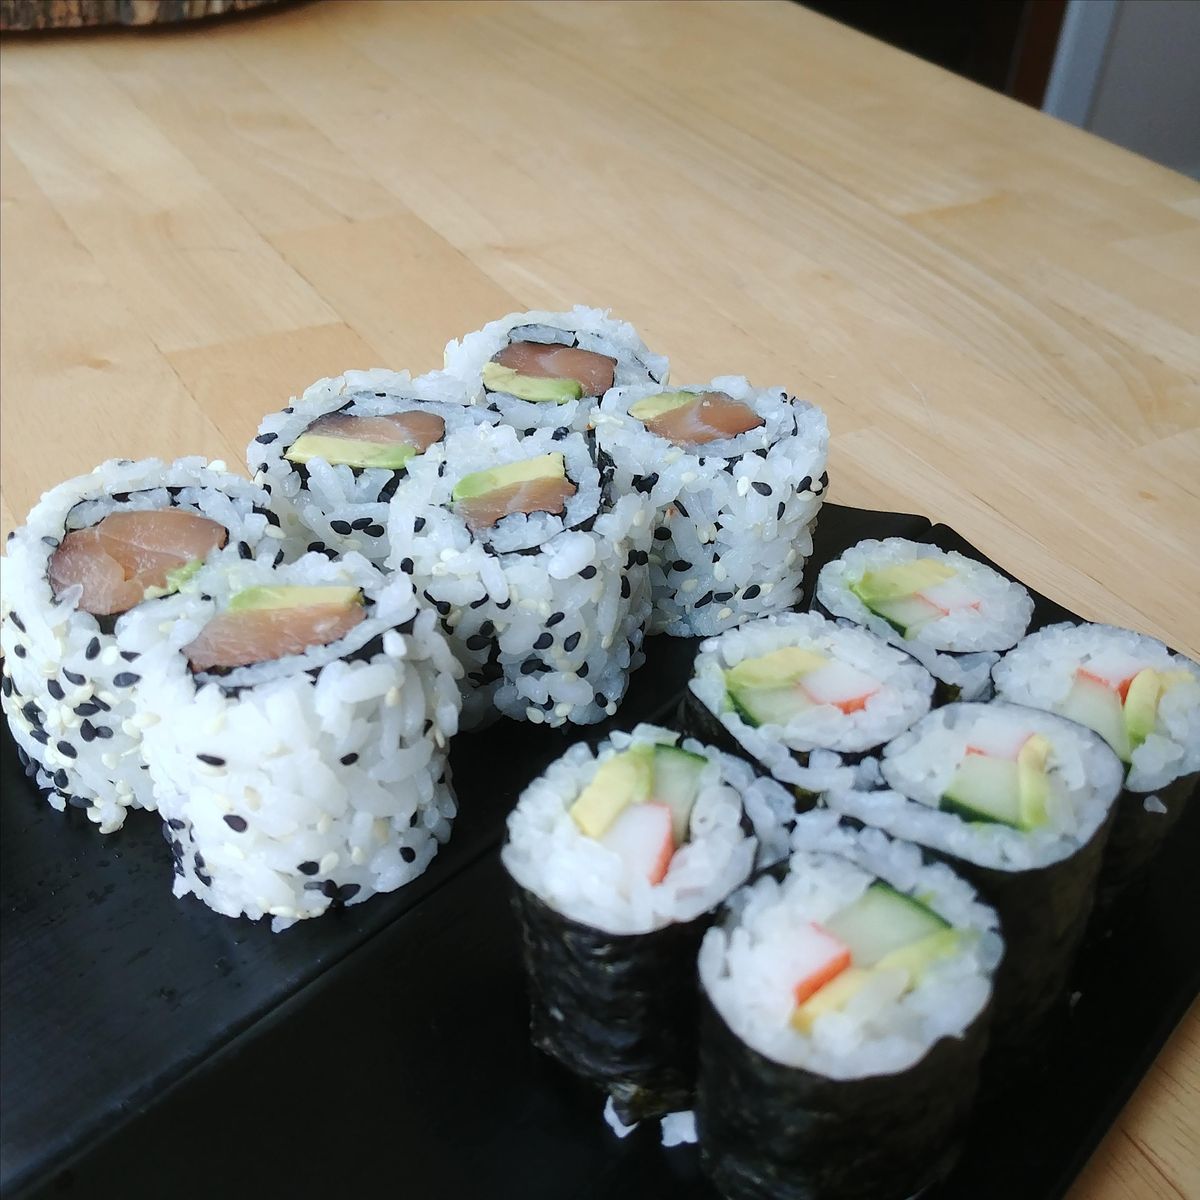 Sushi Rolling